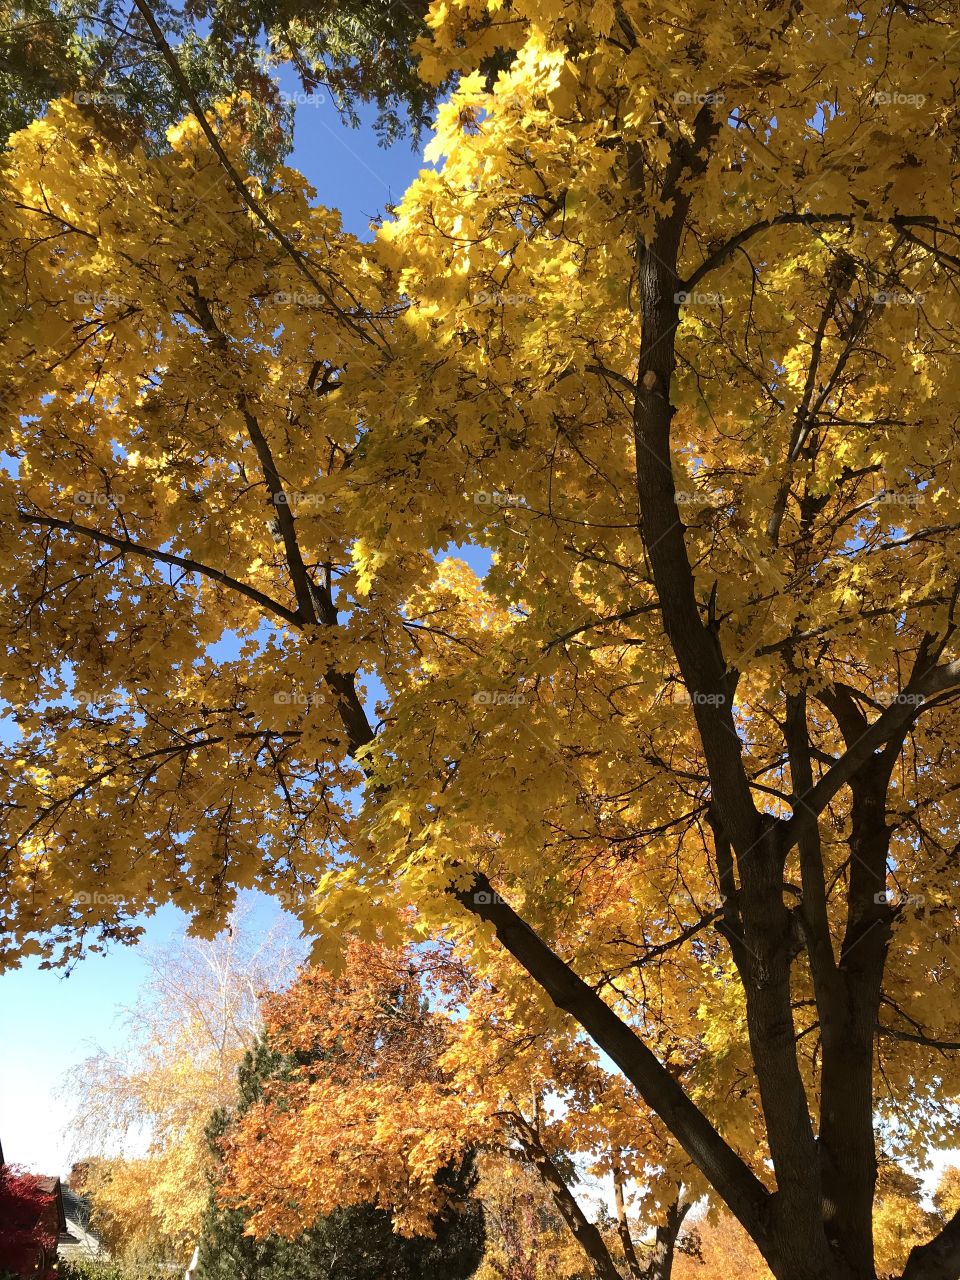 Fall leafy trees